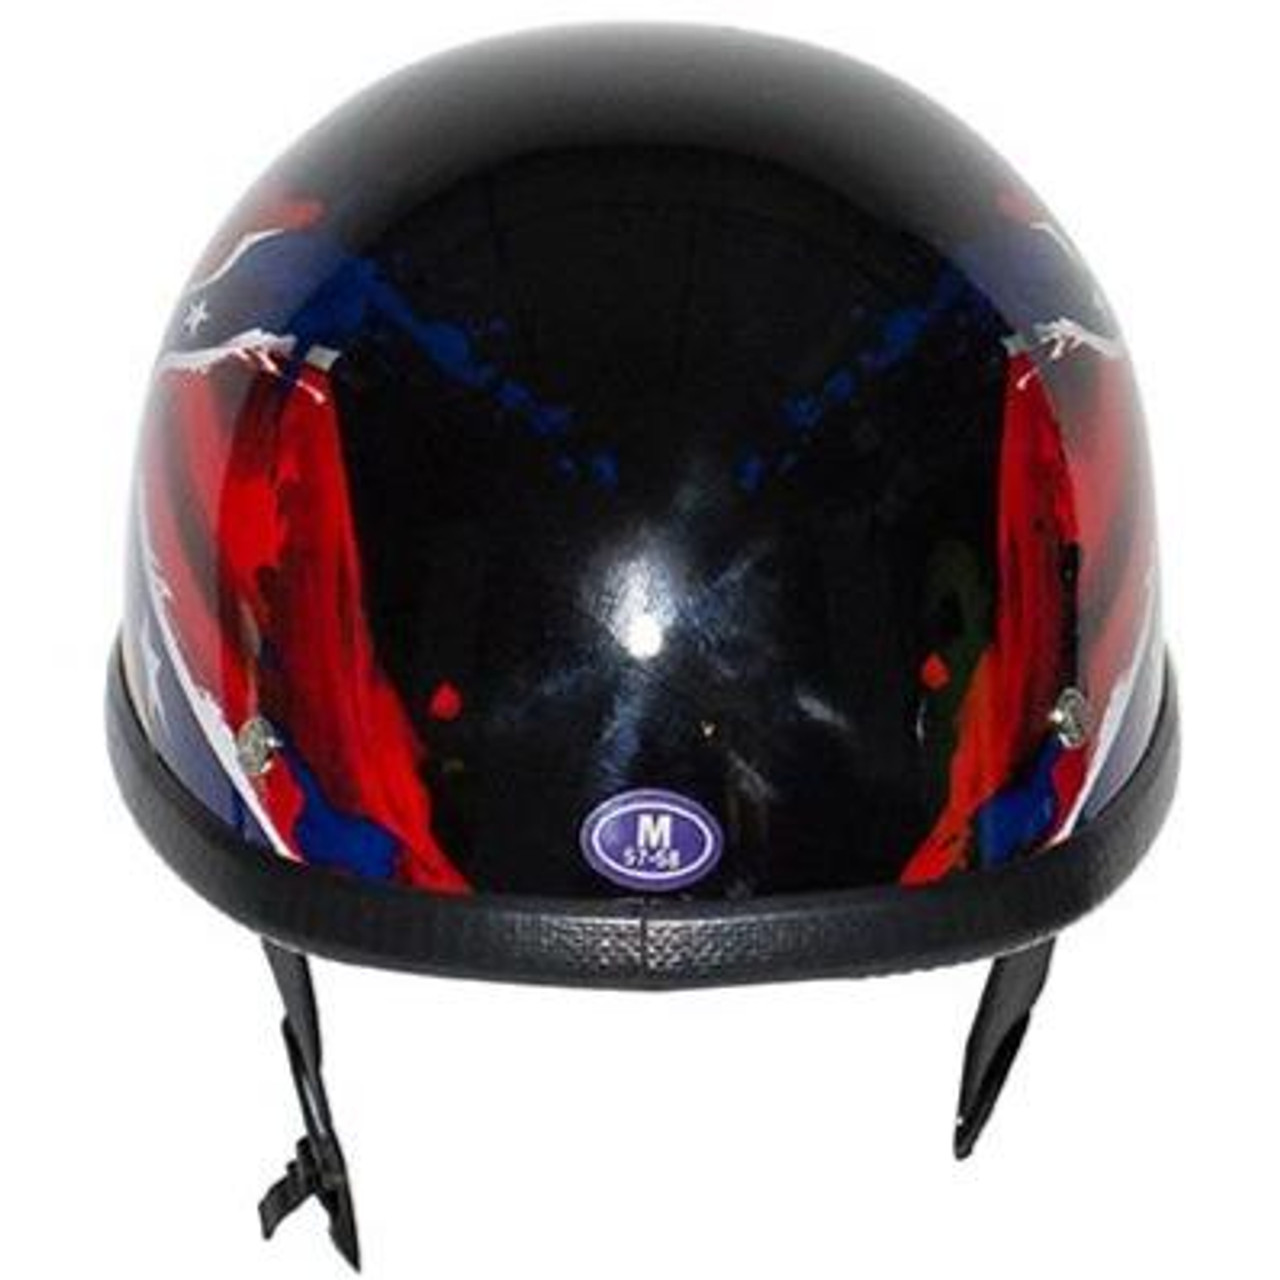 Rebel Flag / Confederate Flag Novelty Motorcycle Helmet - SKU GRL-H401